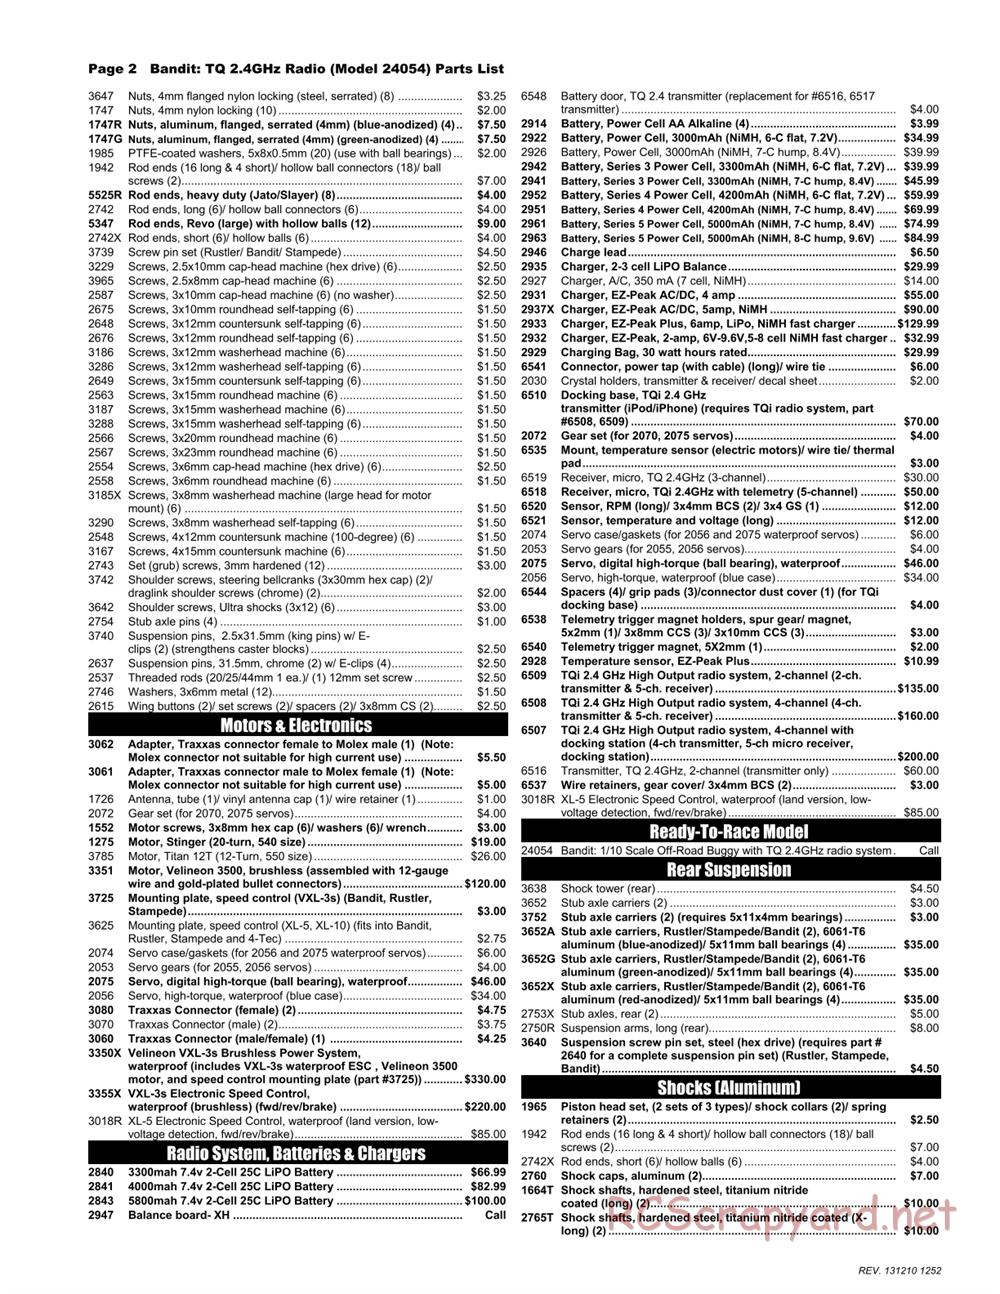 Traxxas - Bandit XL-5 (2013) - Parts List - Page 2